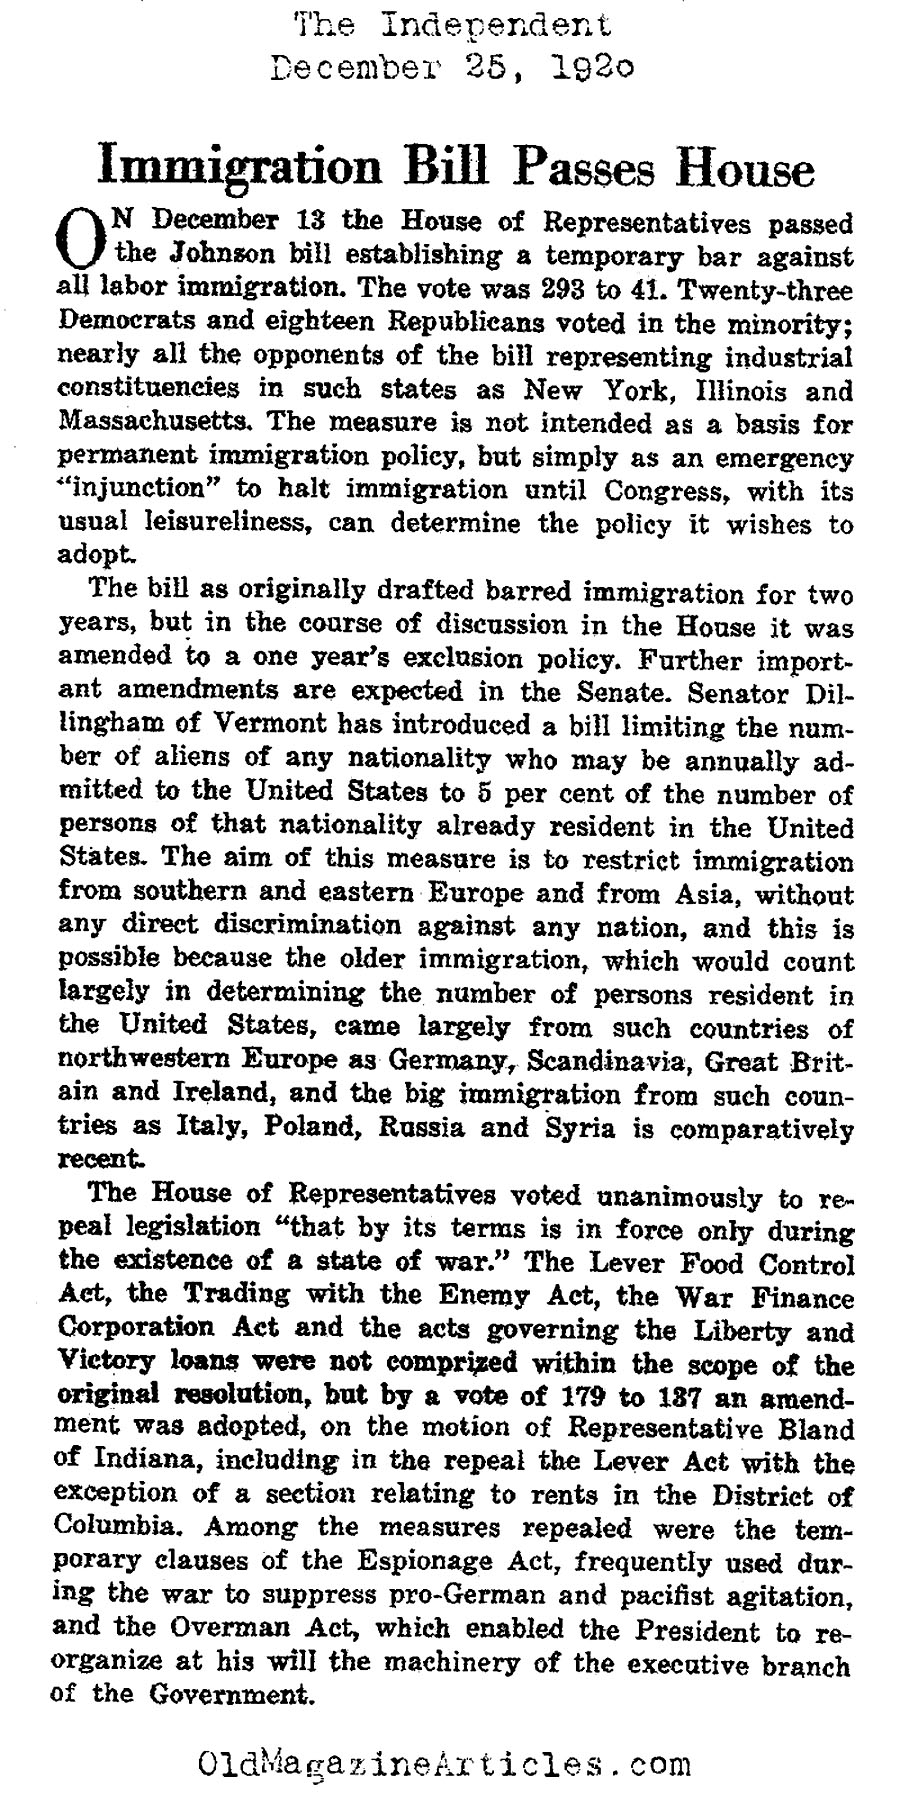 Anti-Immigration Legislation (The Independent, 1920)